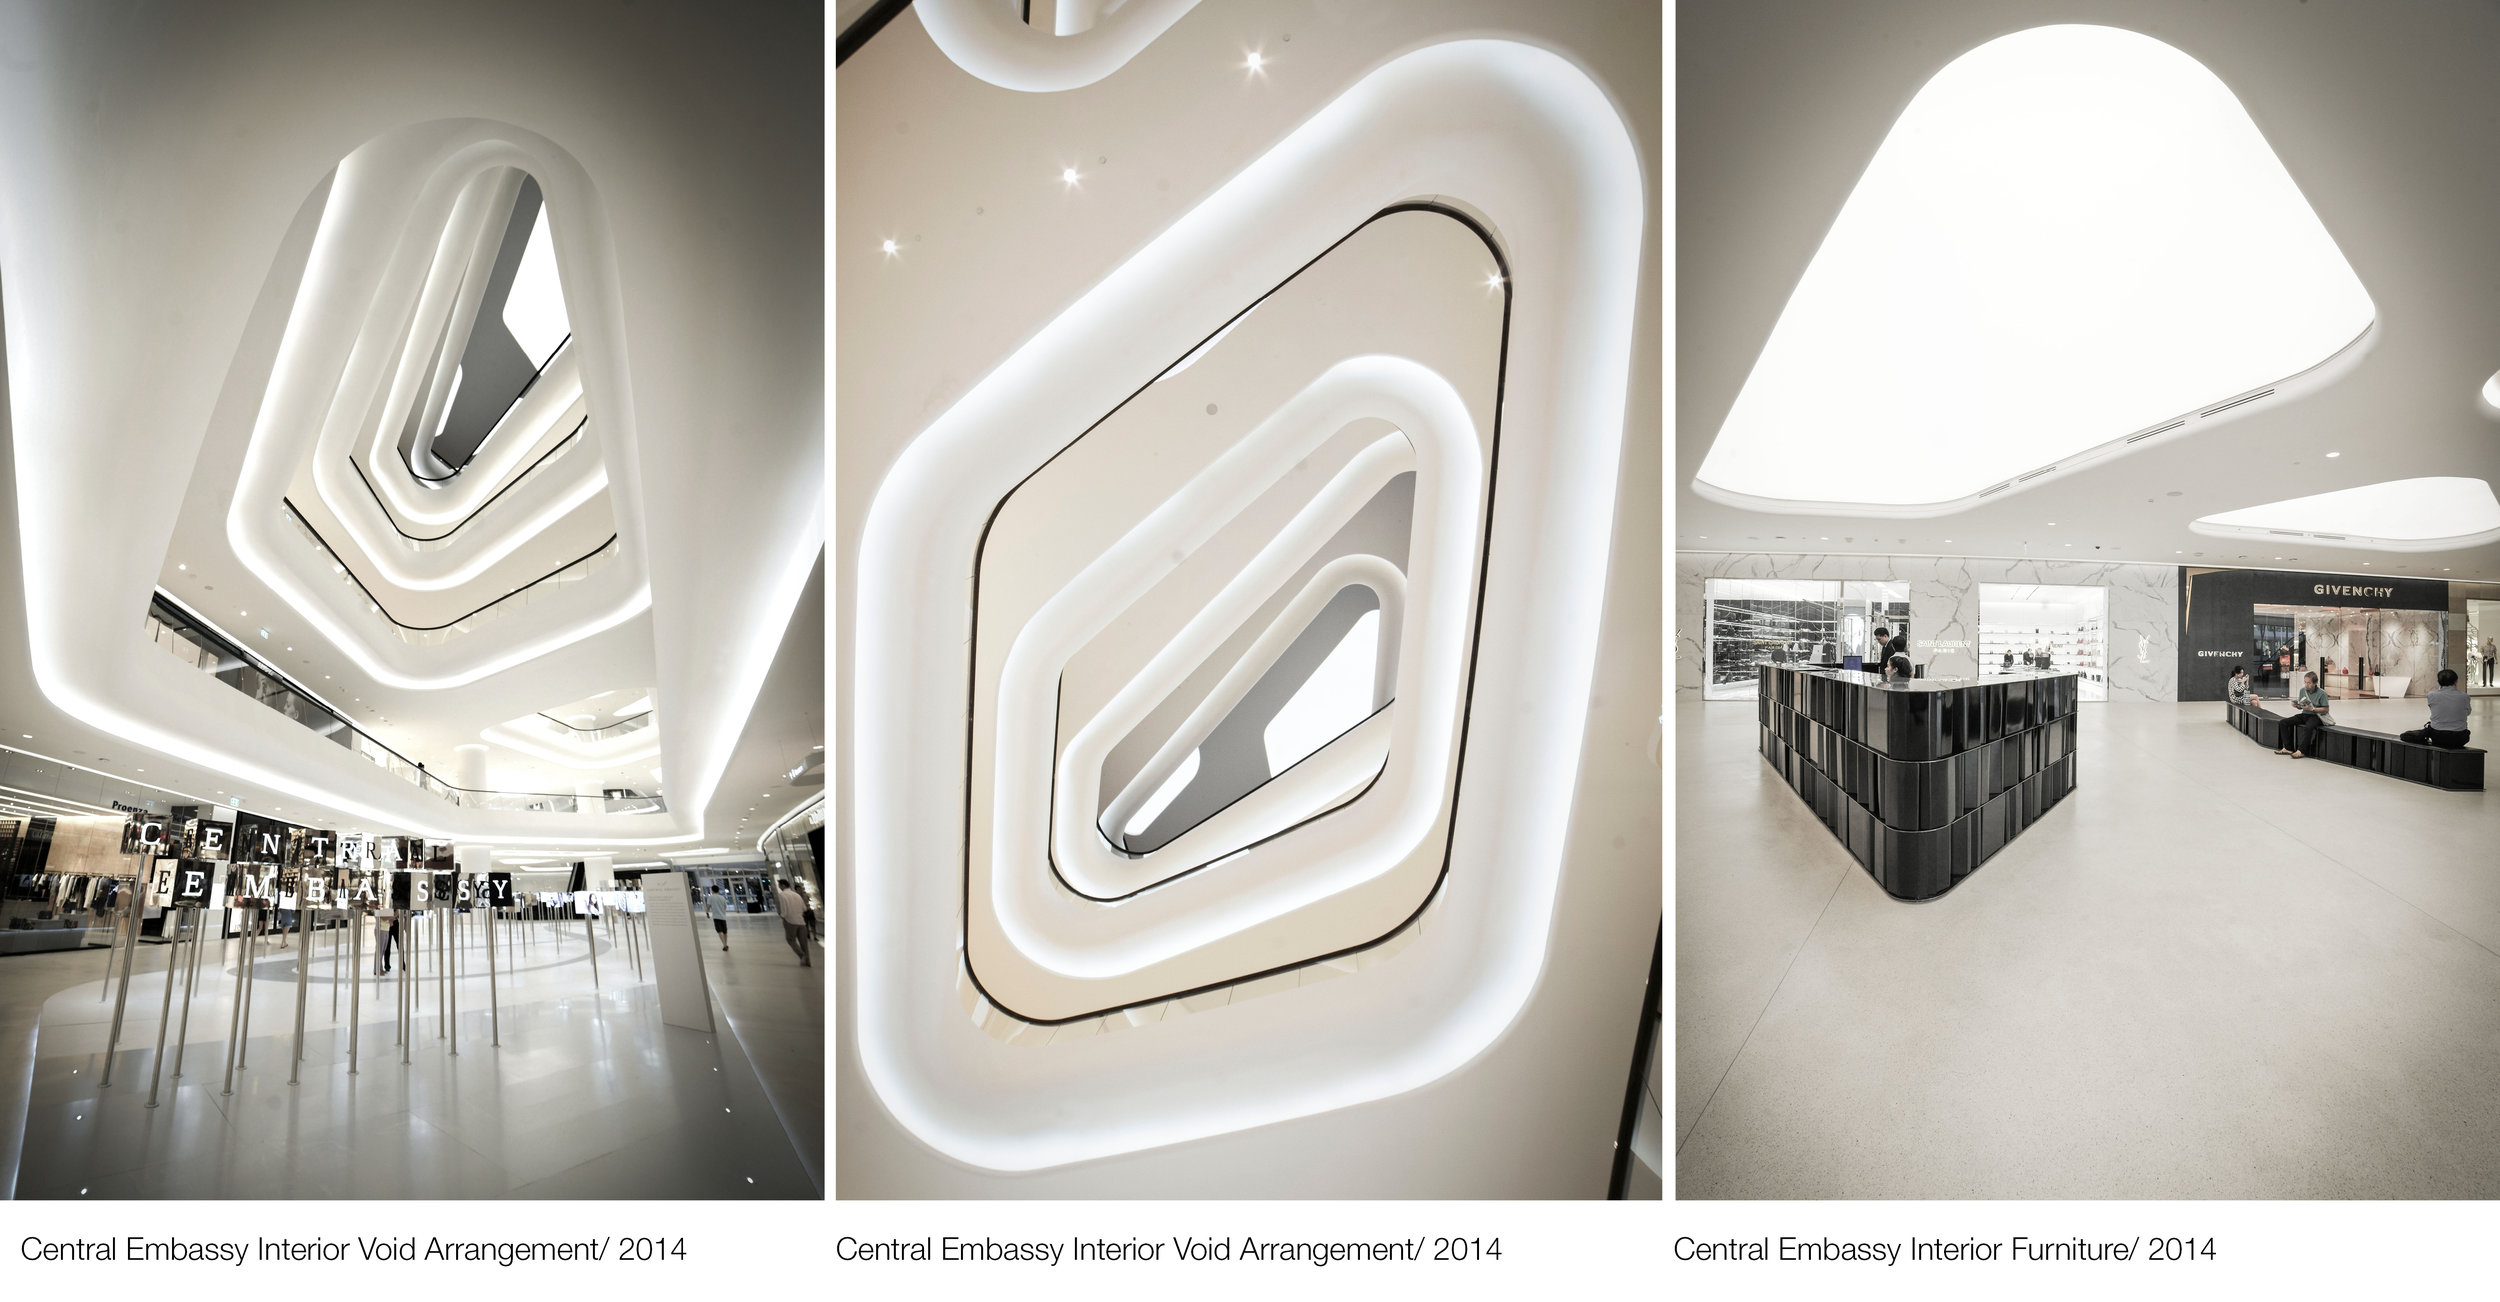 © Copyright Studio DS 2018 - Central Embassy Interior Design Voids As built